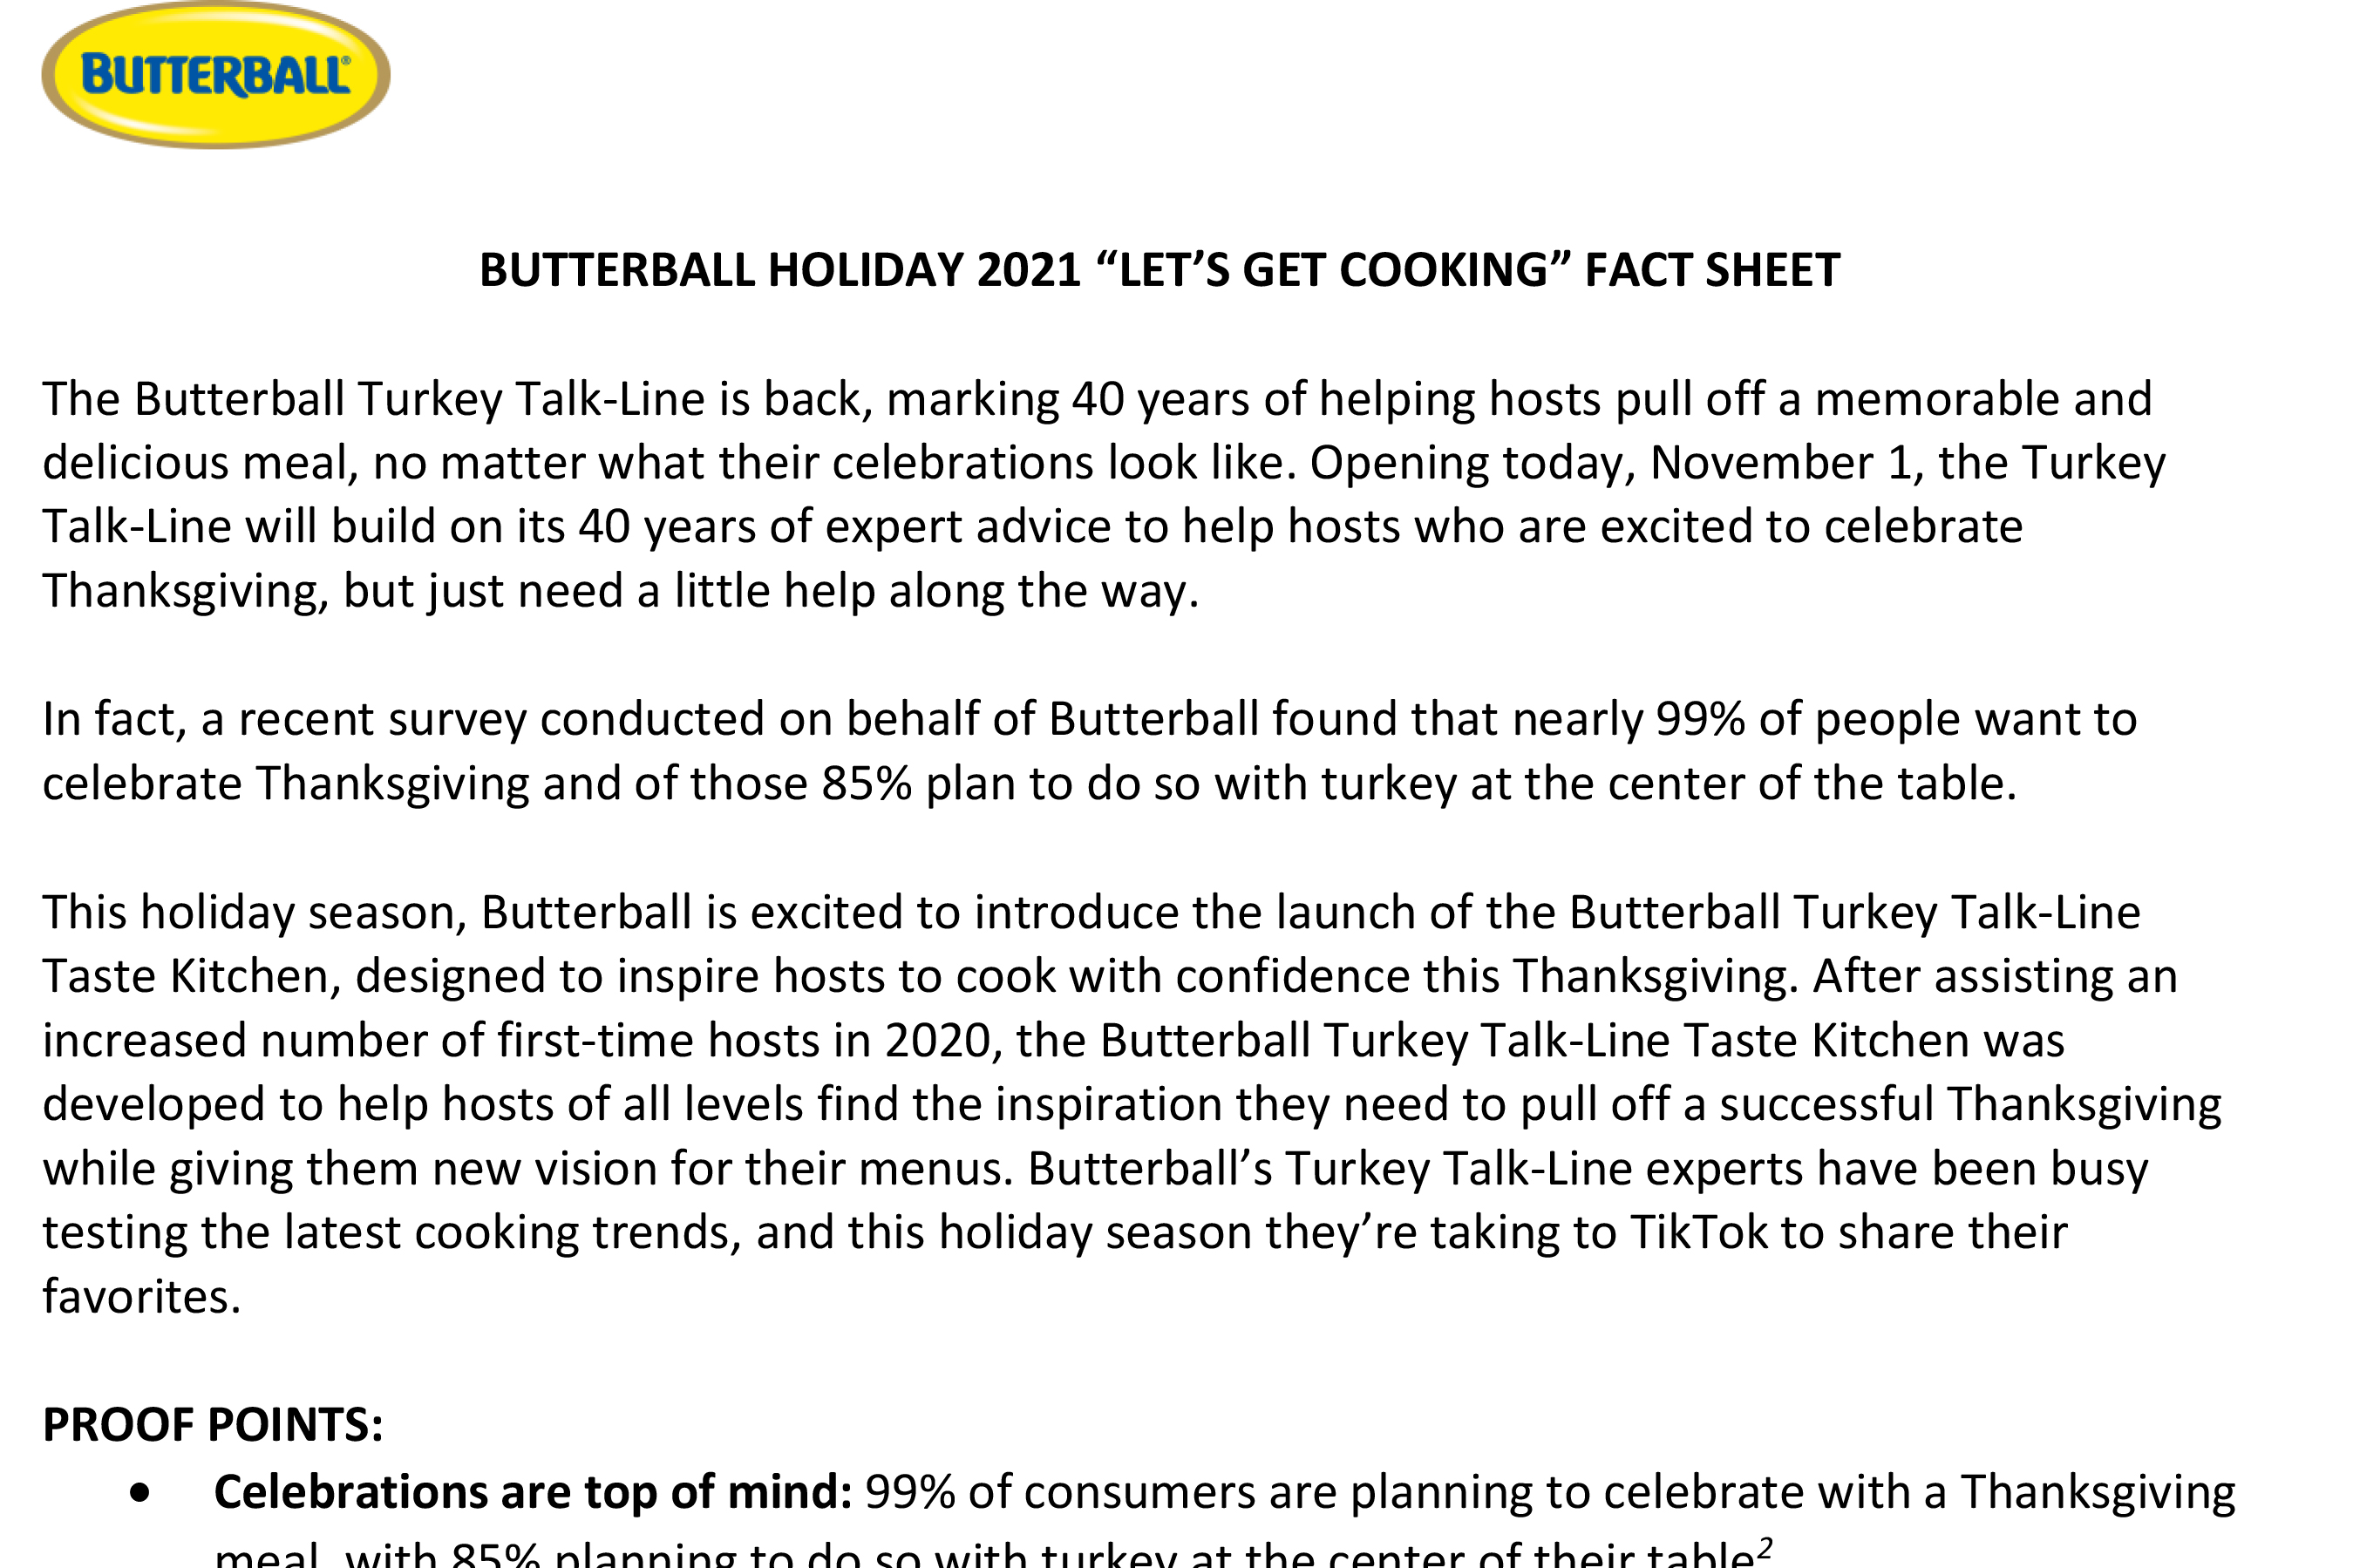 Butterball Holiday 2021 Fact Sheet